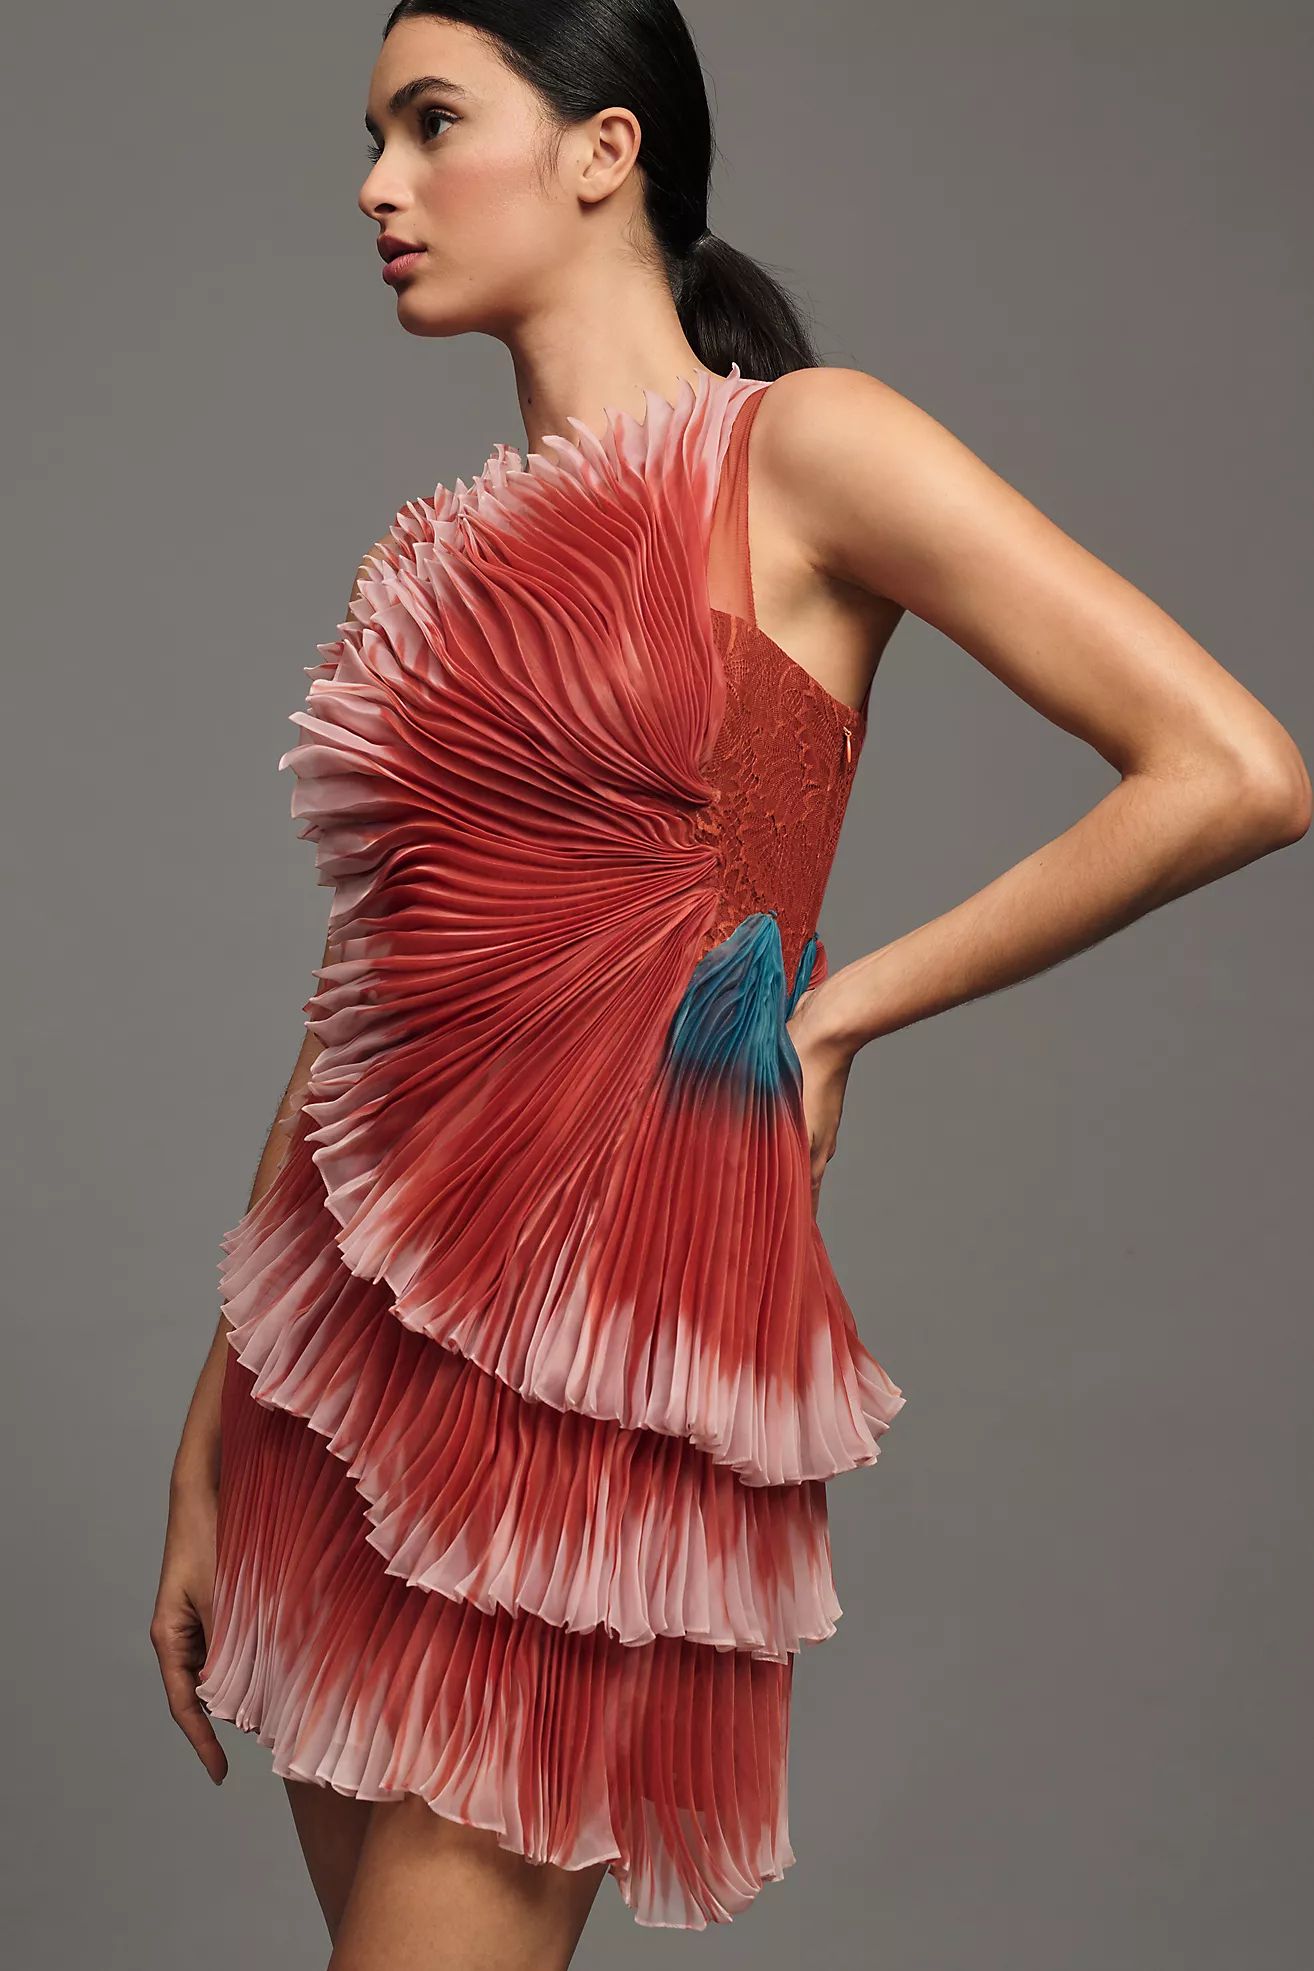 Geisha Designs 3D Floral Asymmetrical Mini Dress | Anthropologie (US)